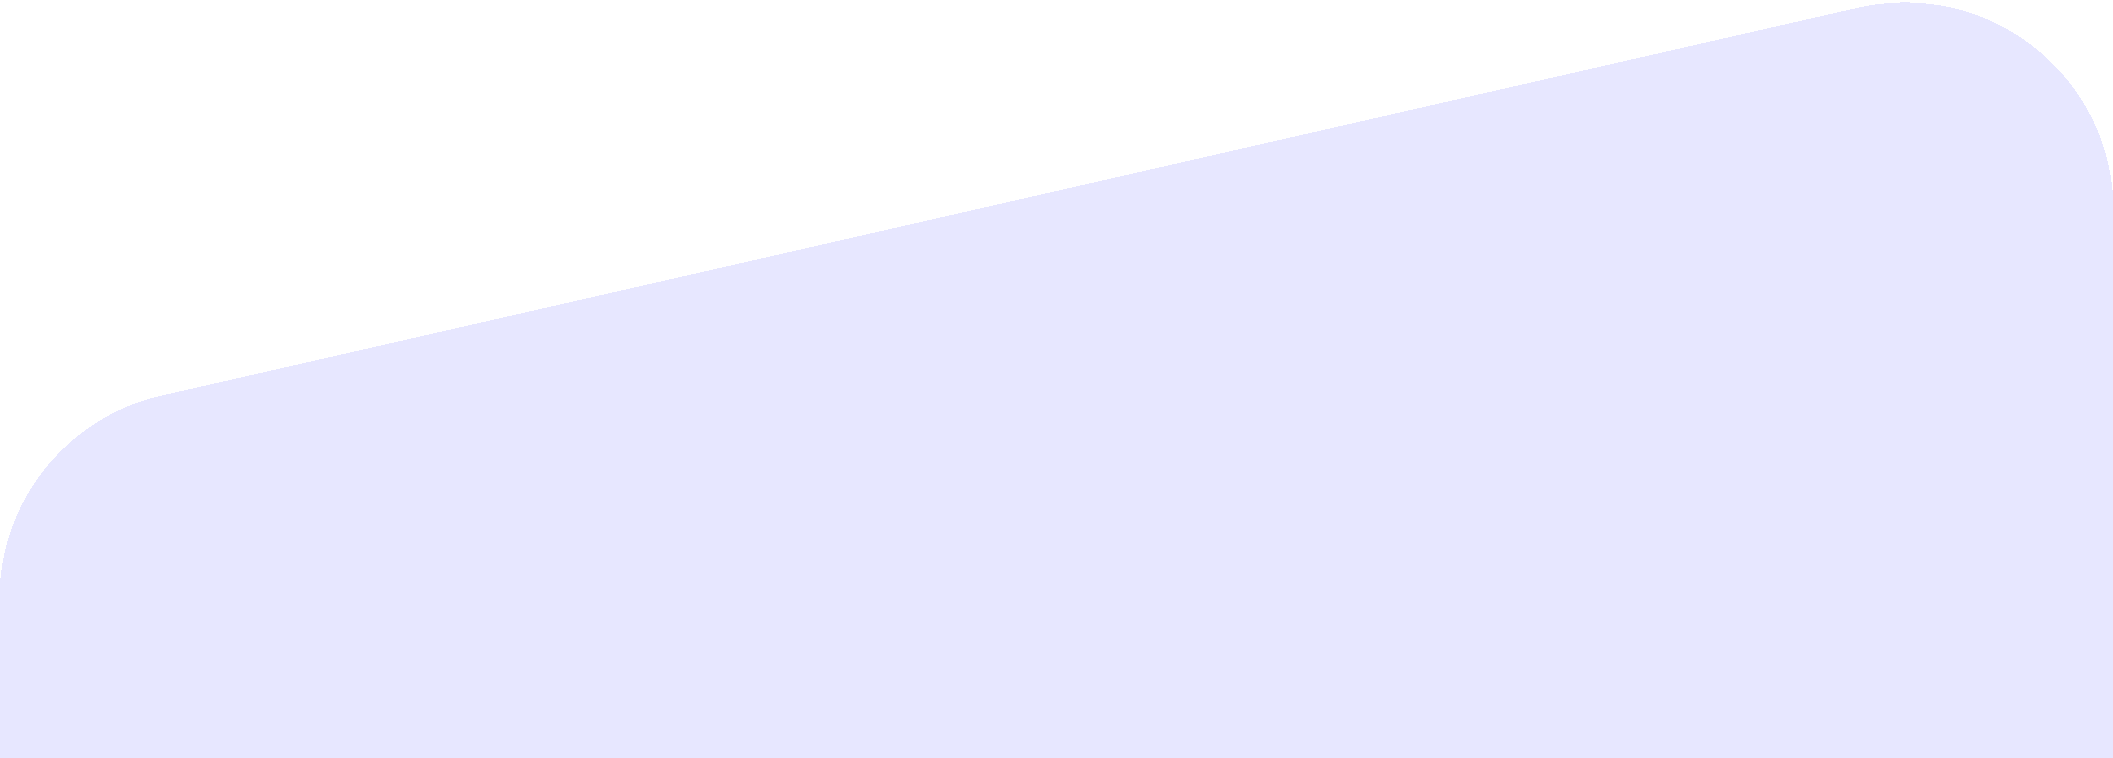 rectangle 4 1